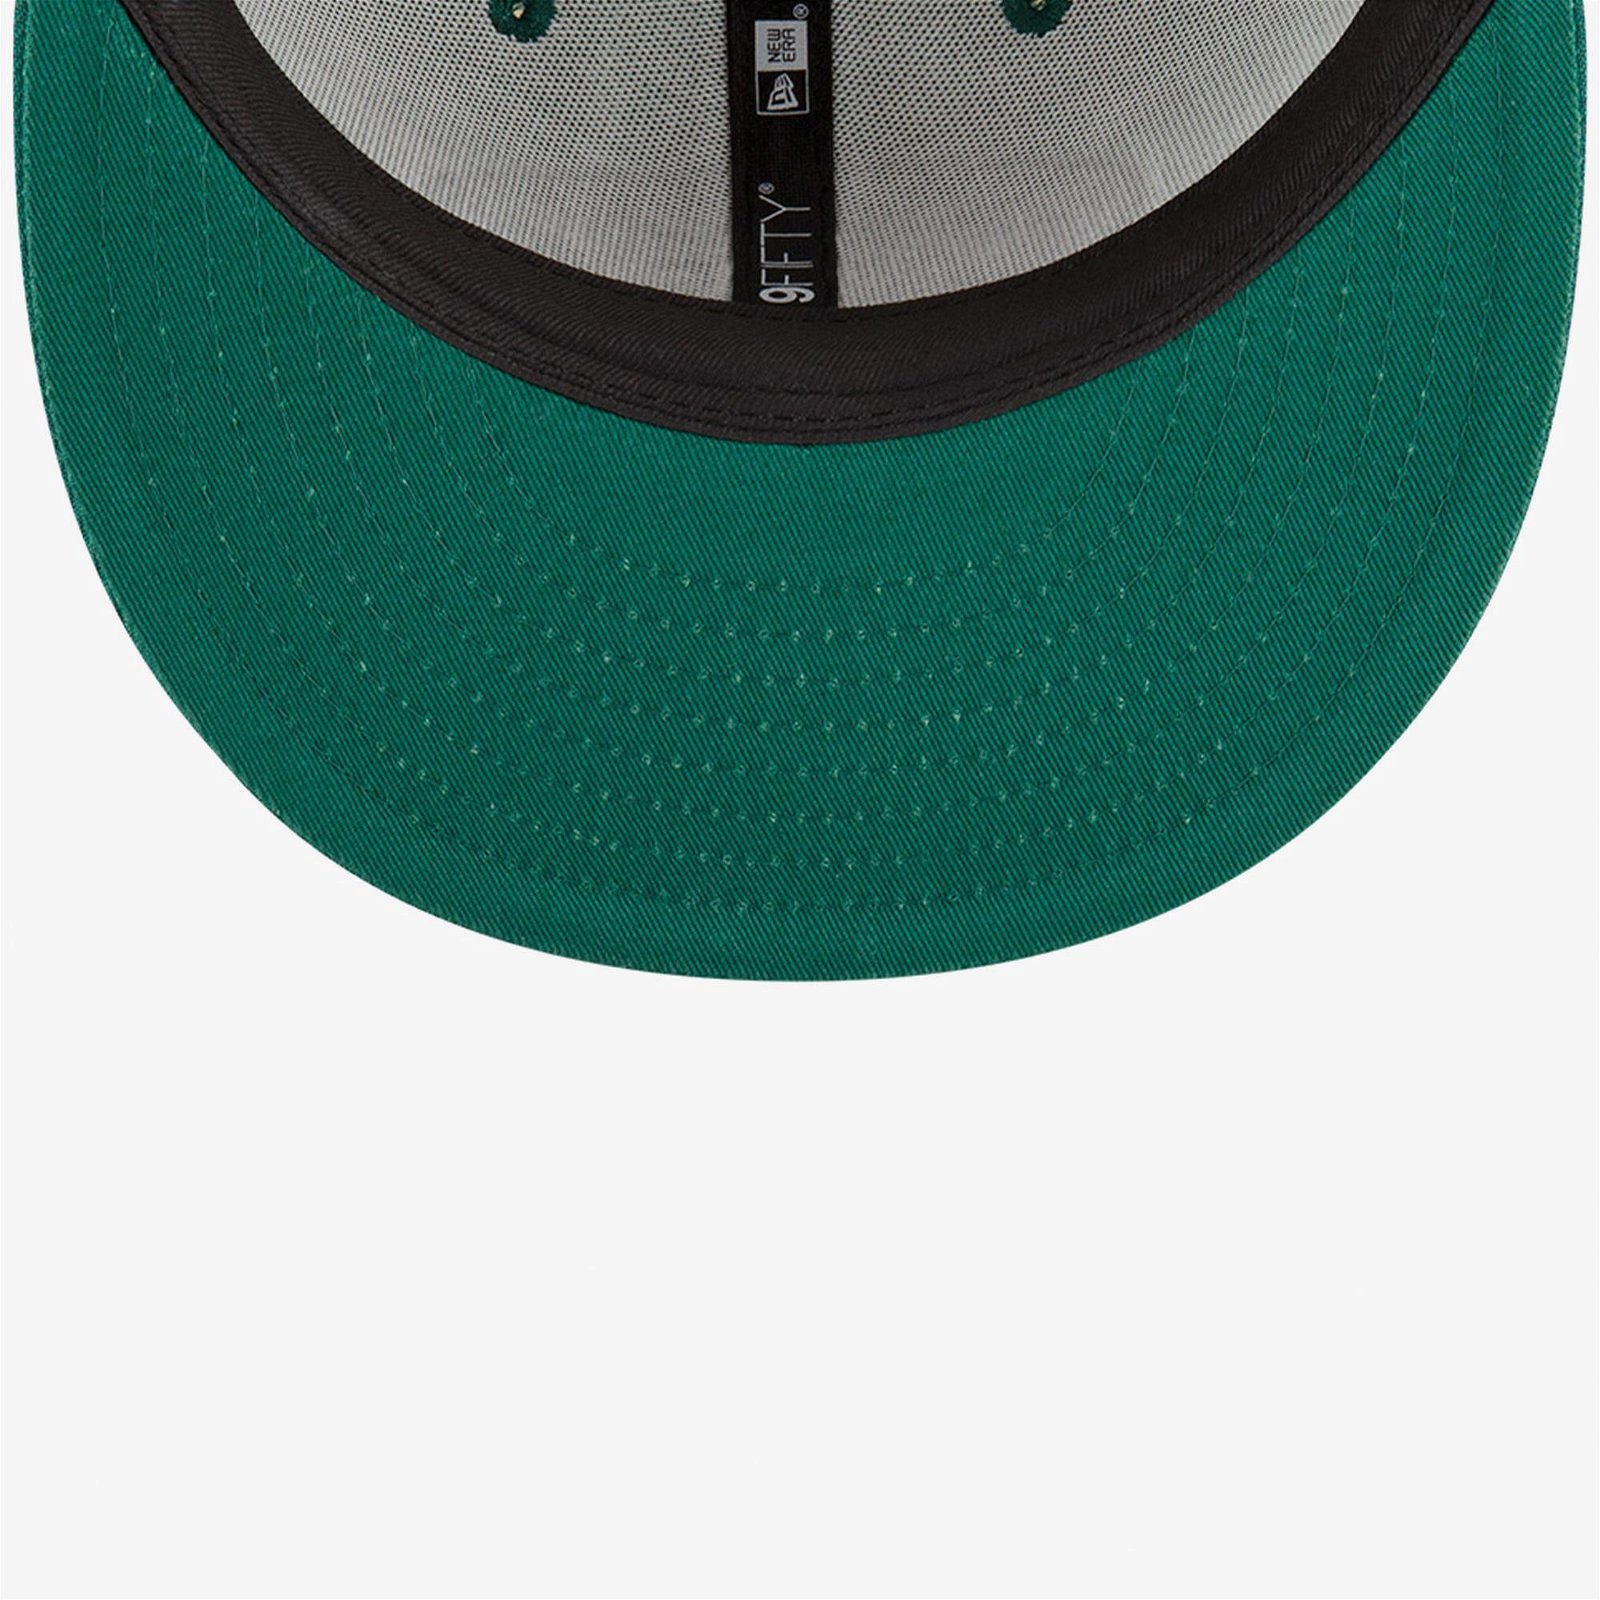 New Era New York Jets Unisex Yeşil Basketball Şapka